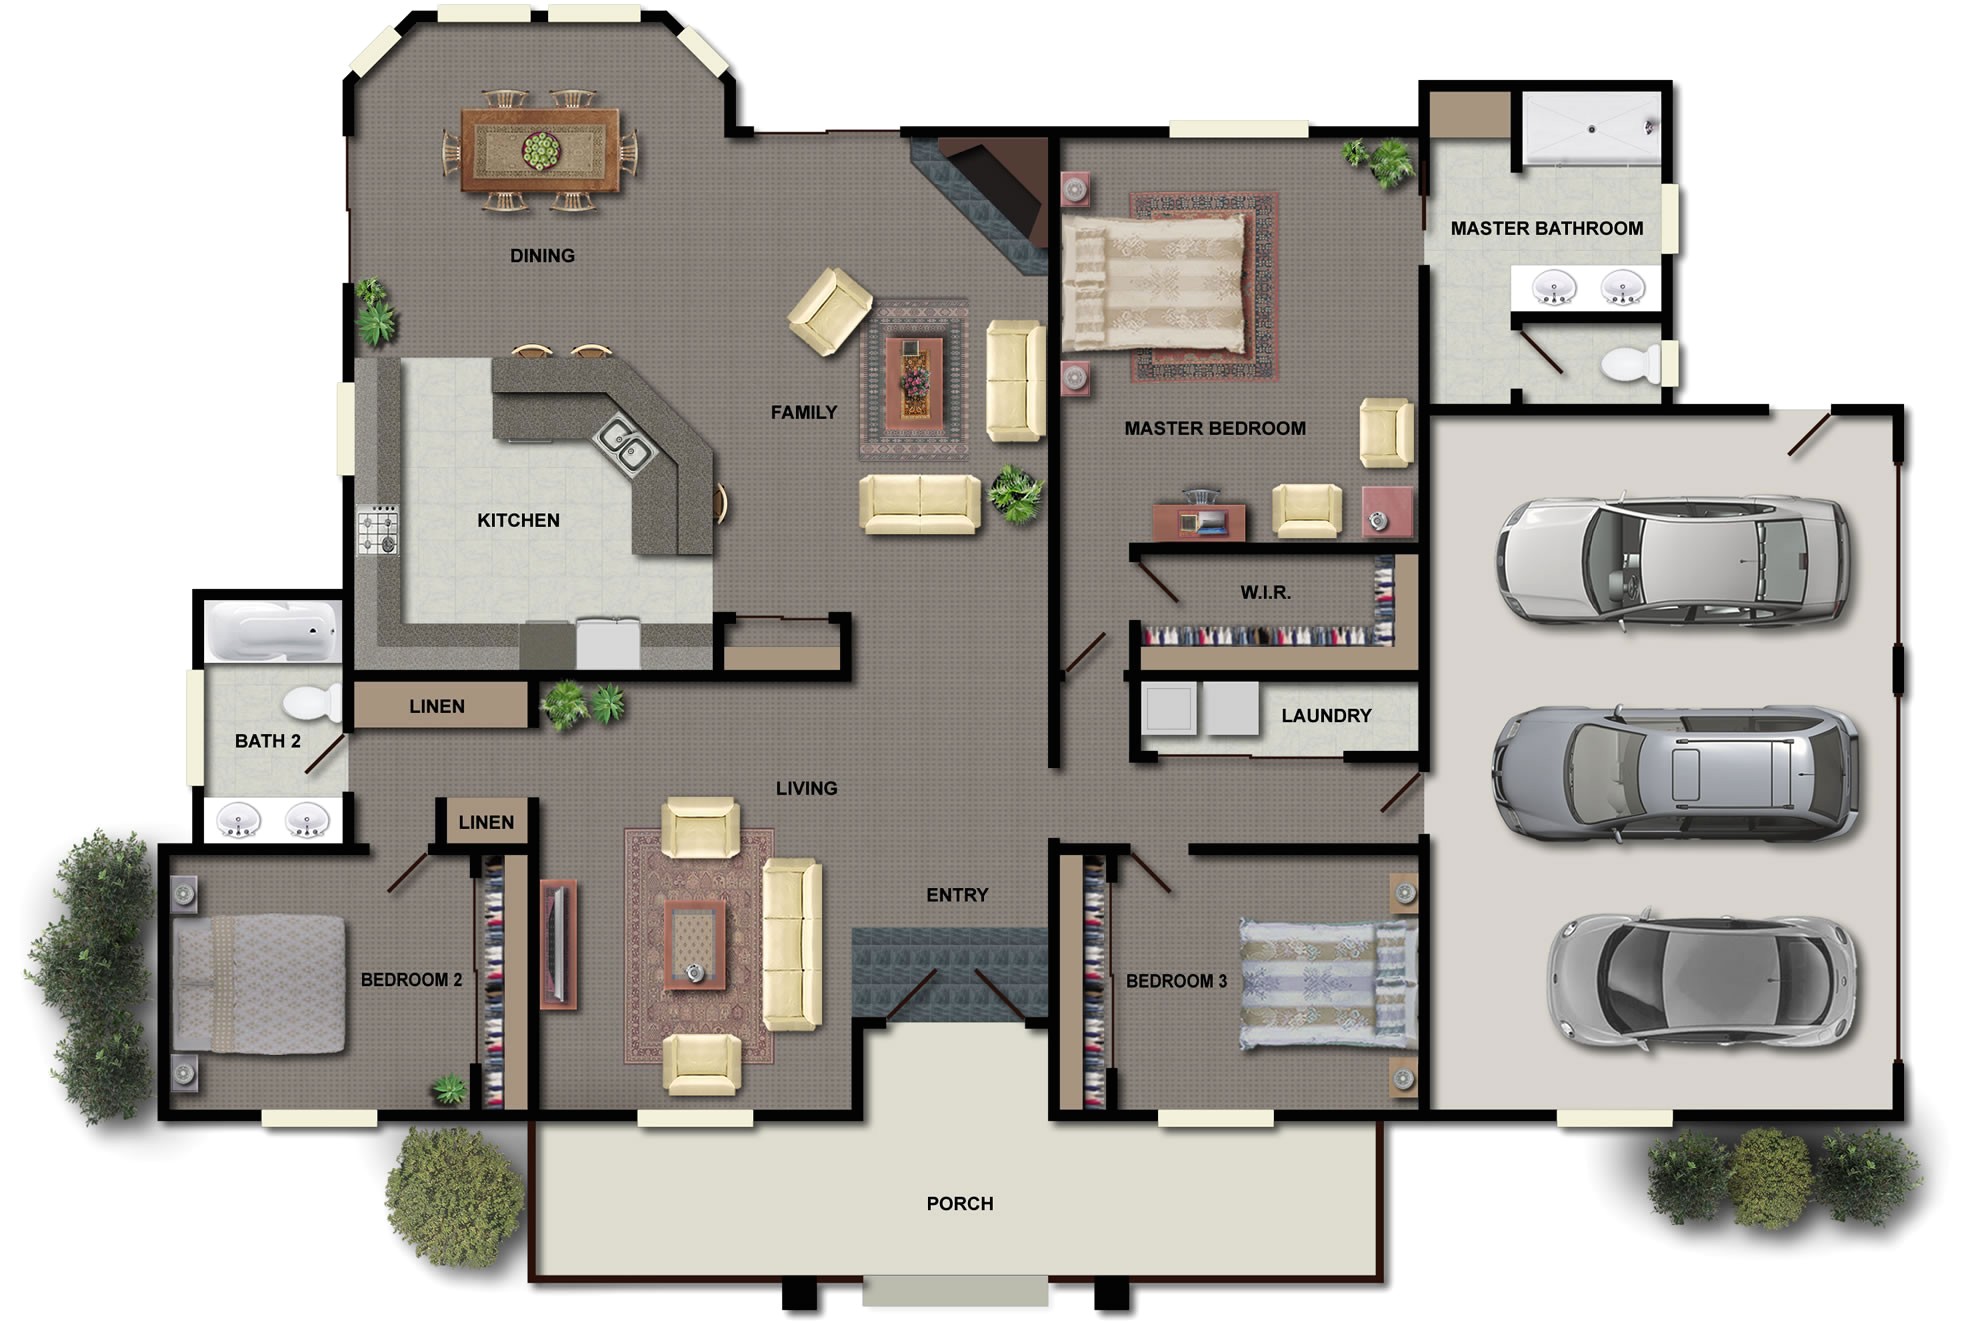 3 bedroom house plans ideas